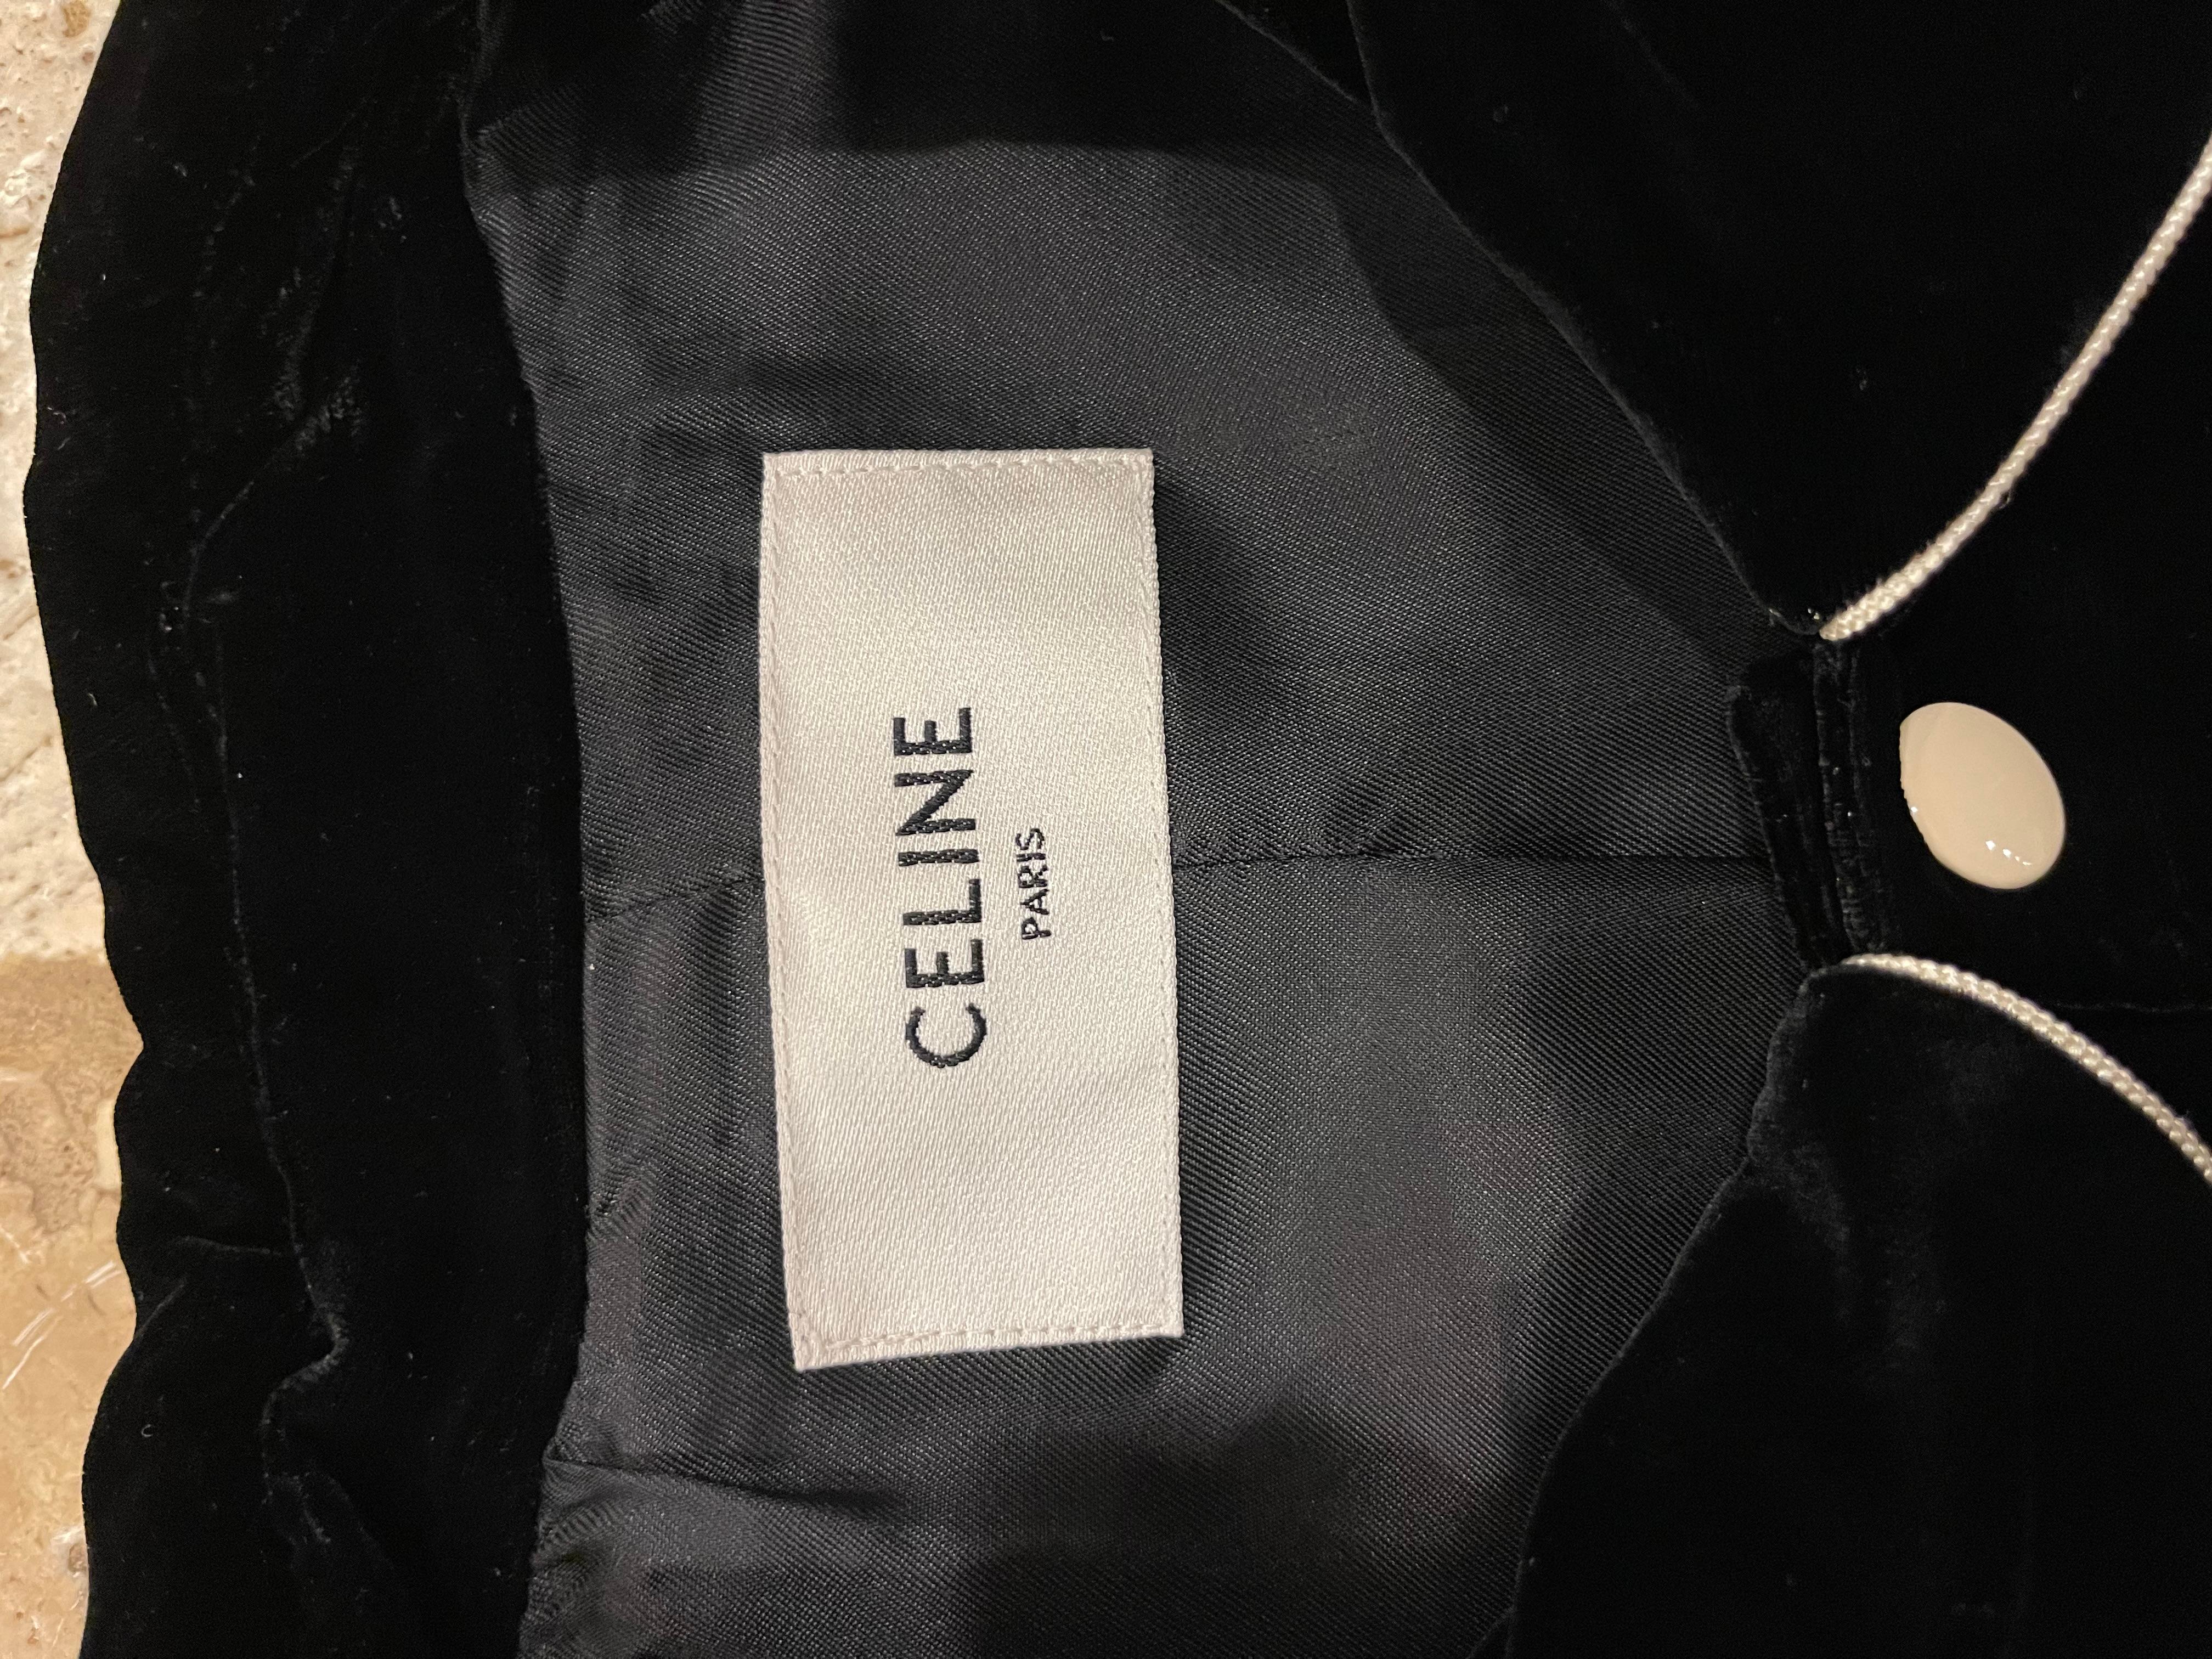 Celine Hedi Slimane Black Velvet Teddy Varsity Jacket RARE size 48 For Sale 2